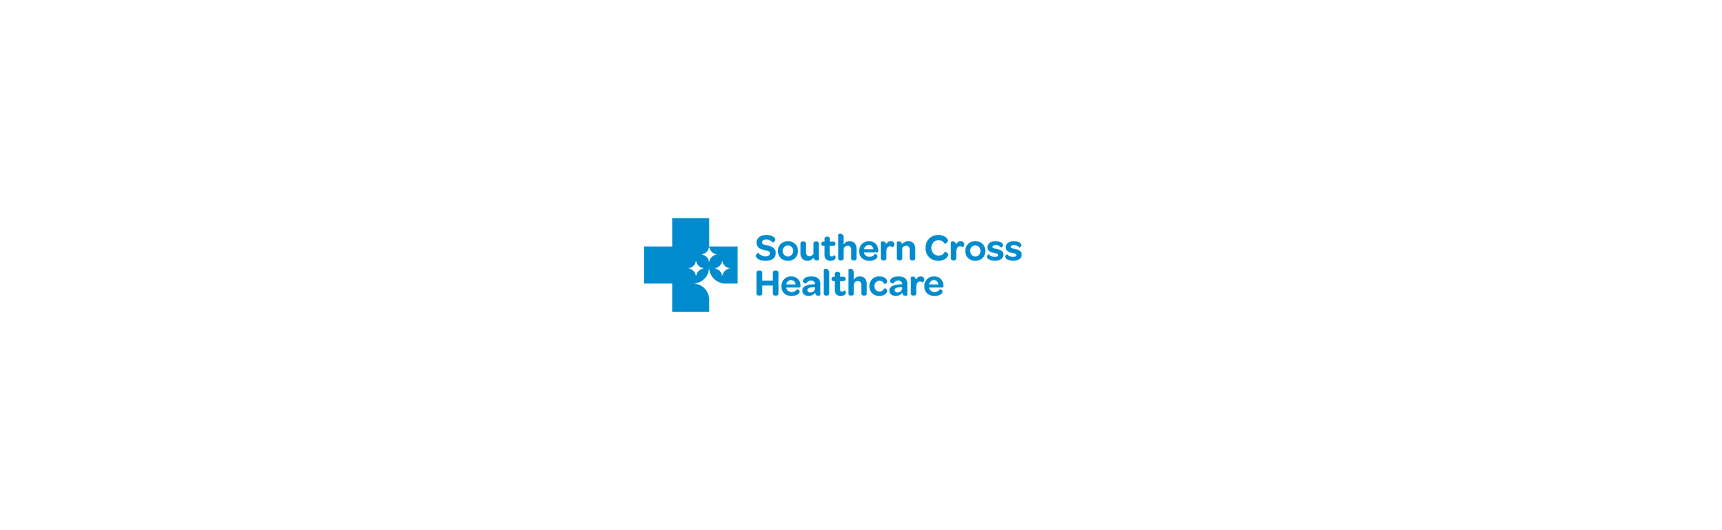 Southern Cross Healthcare logo